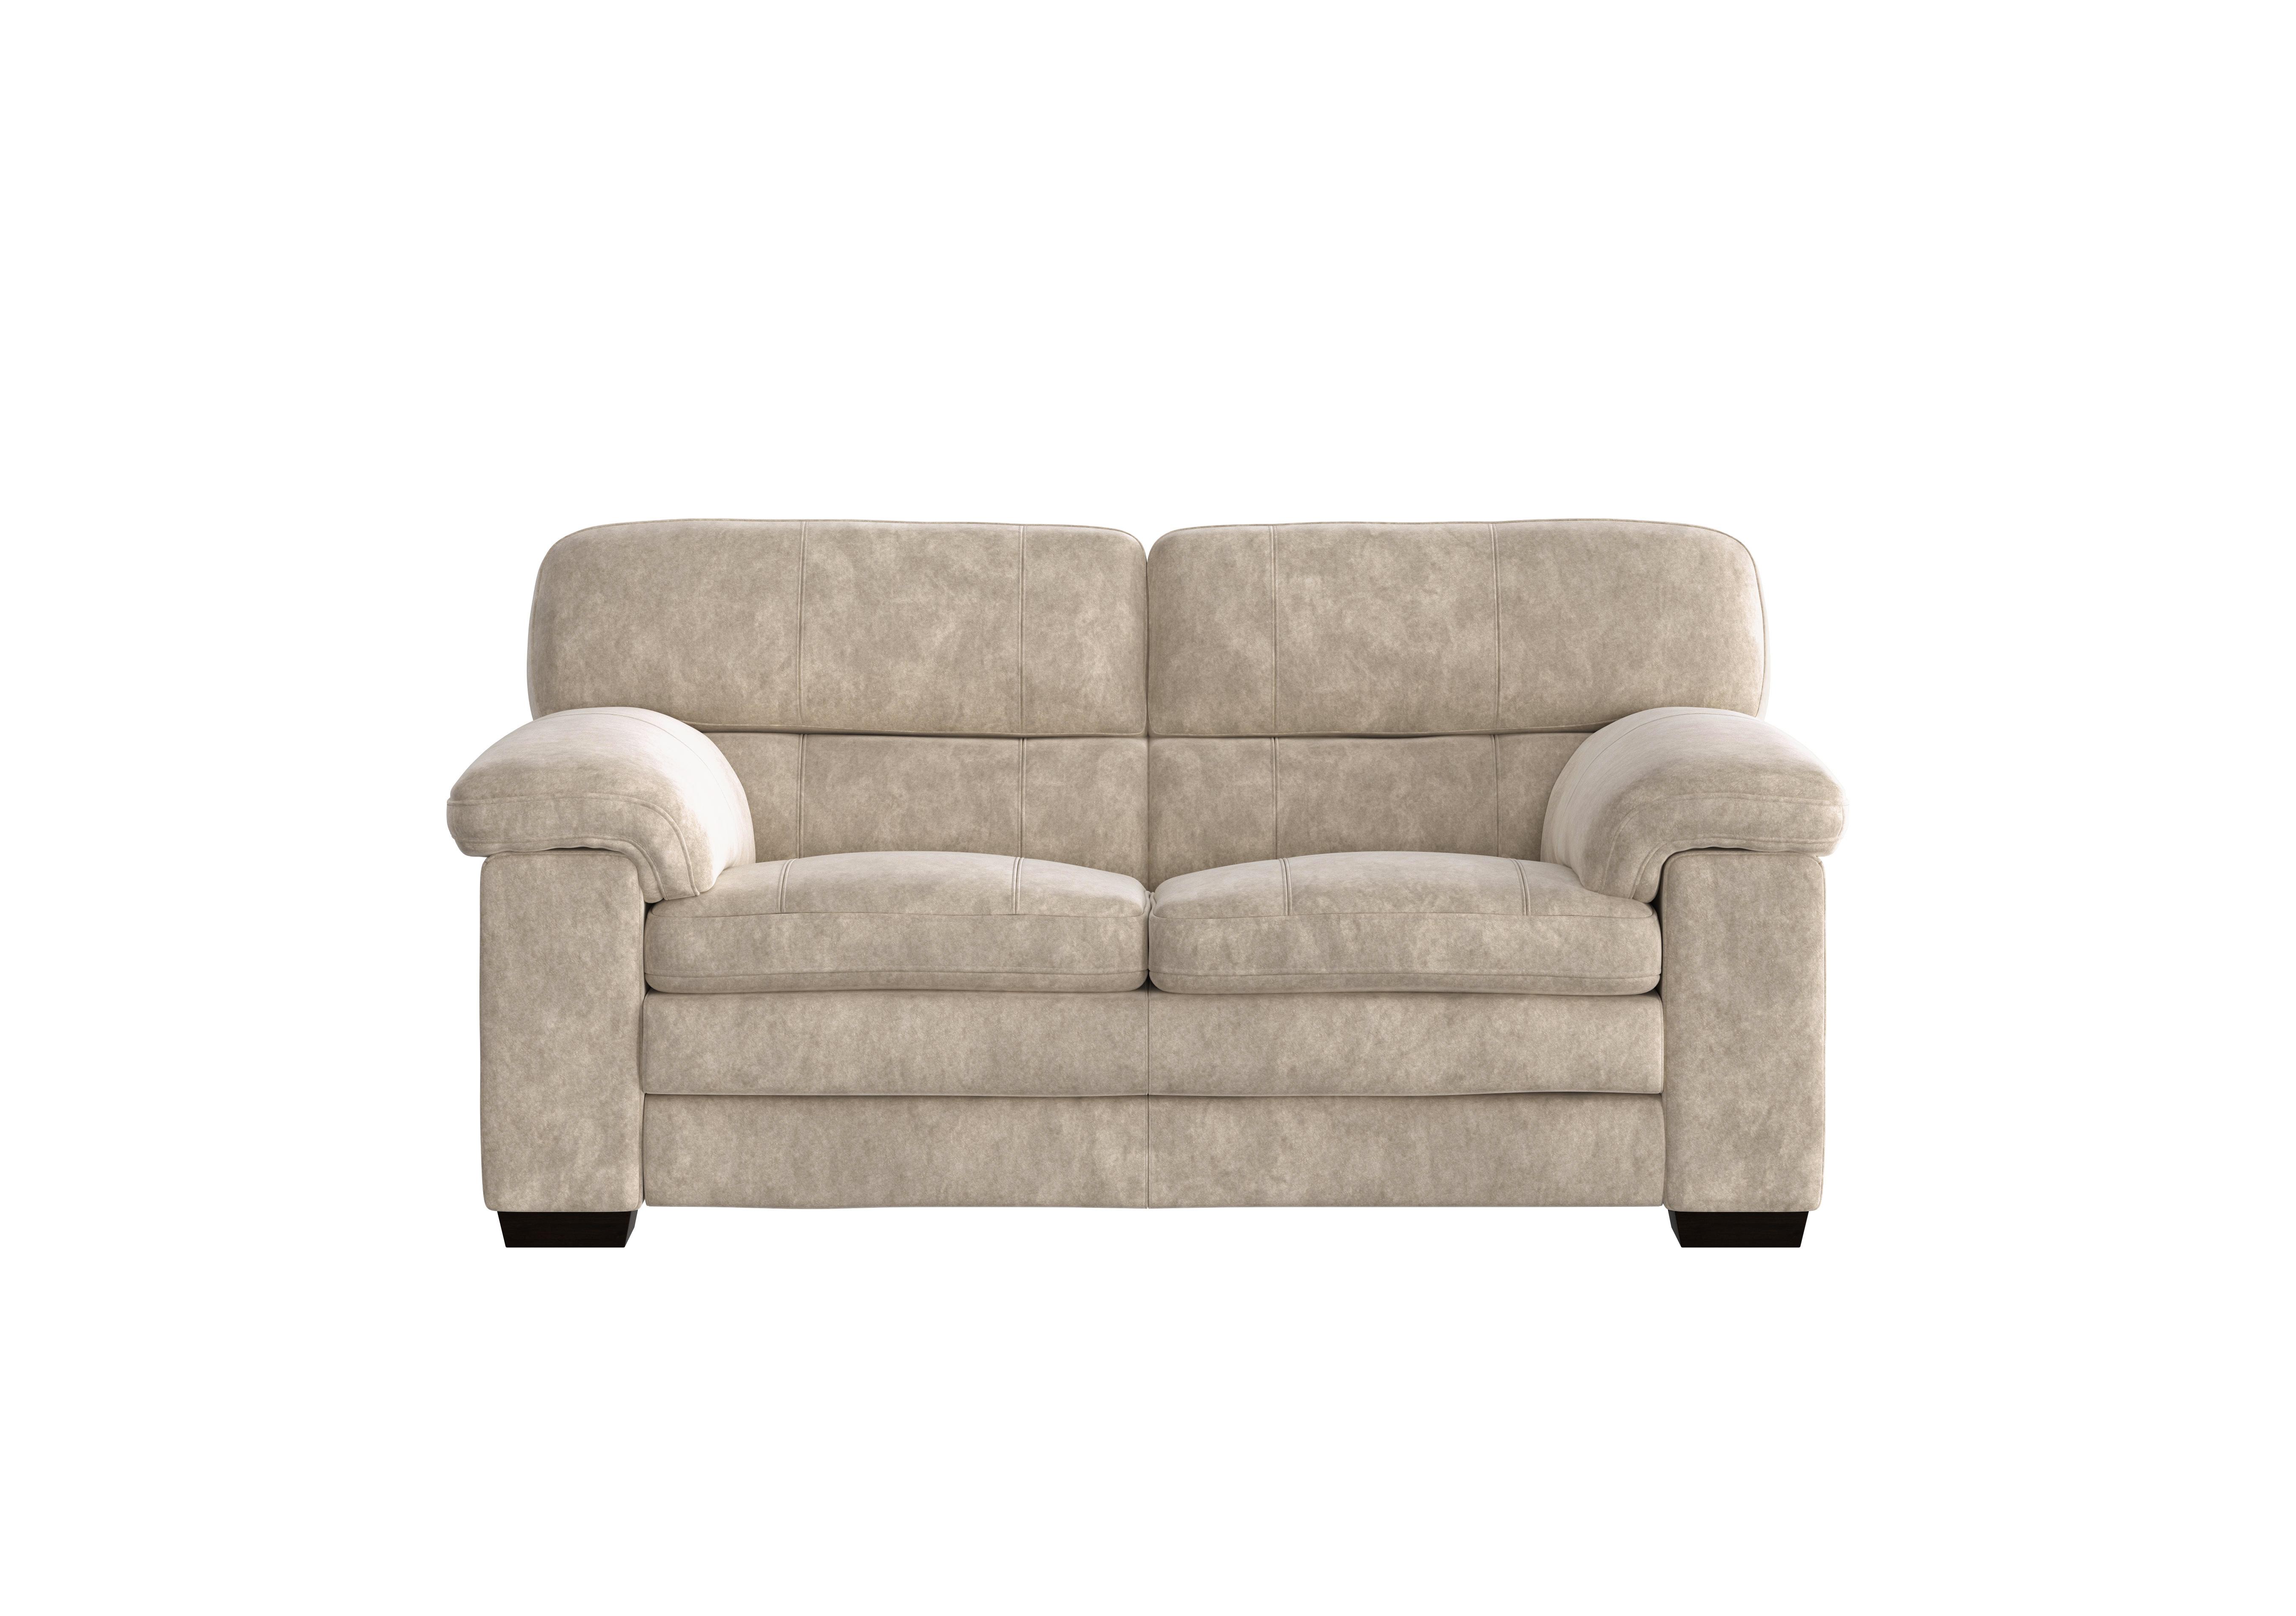 Cozee Fabric 2 Seater Sofa in Bfa-Bnn-R26 Fv2 Cream on Furniture Village